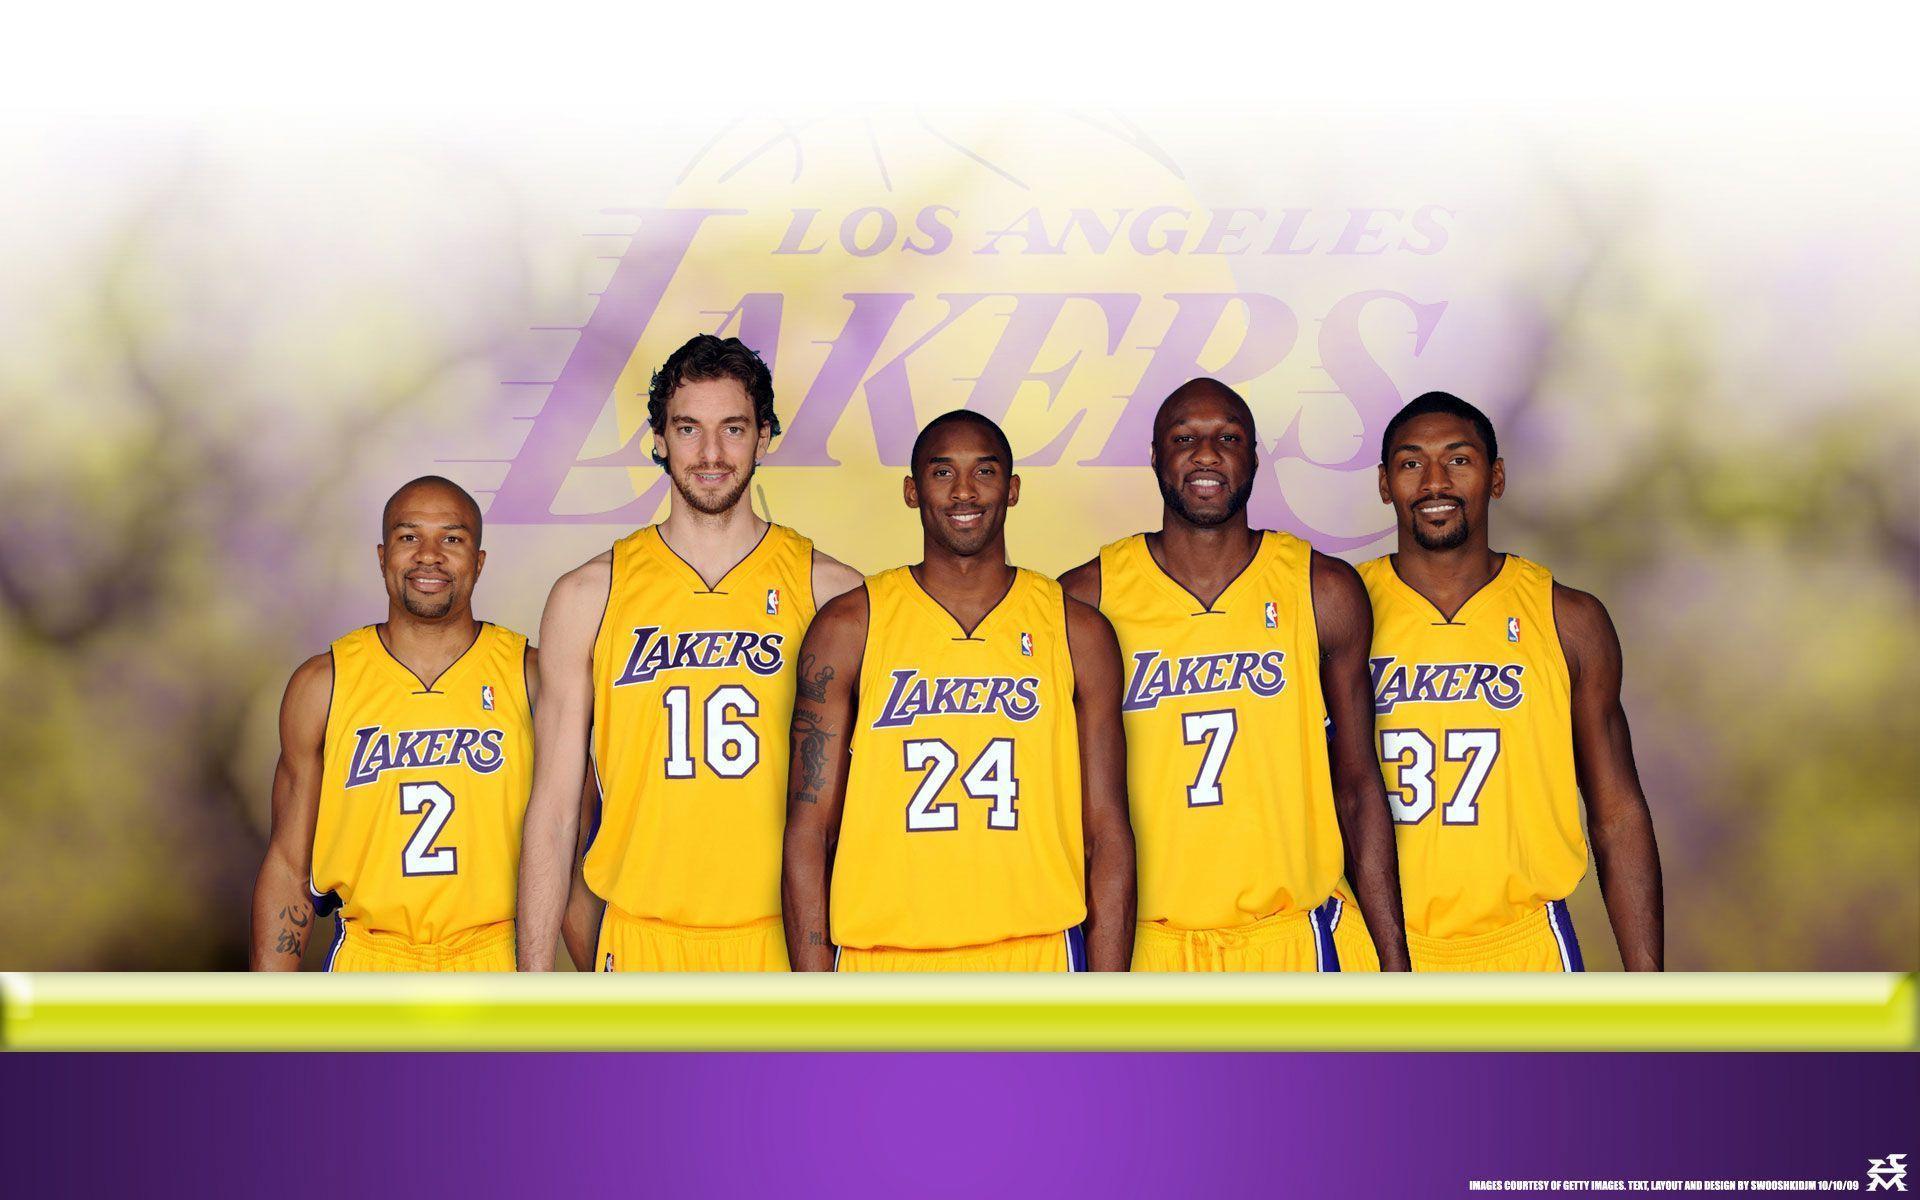 Los Angeles Lakers Wallpaper at BasketWallpaper